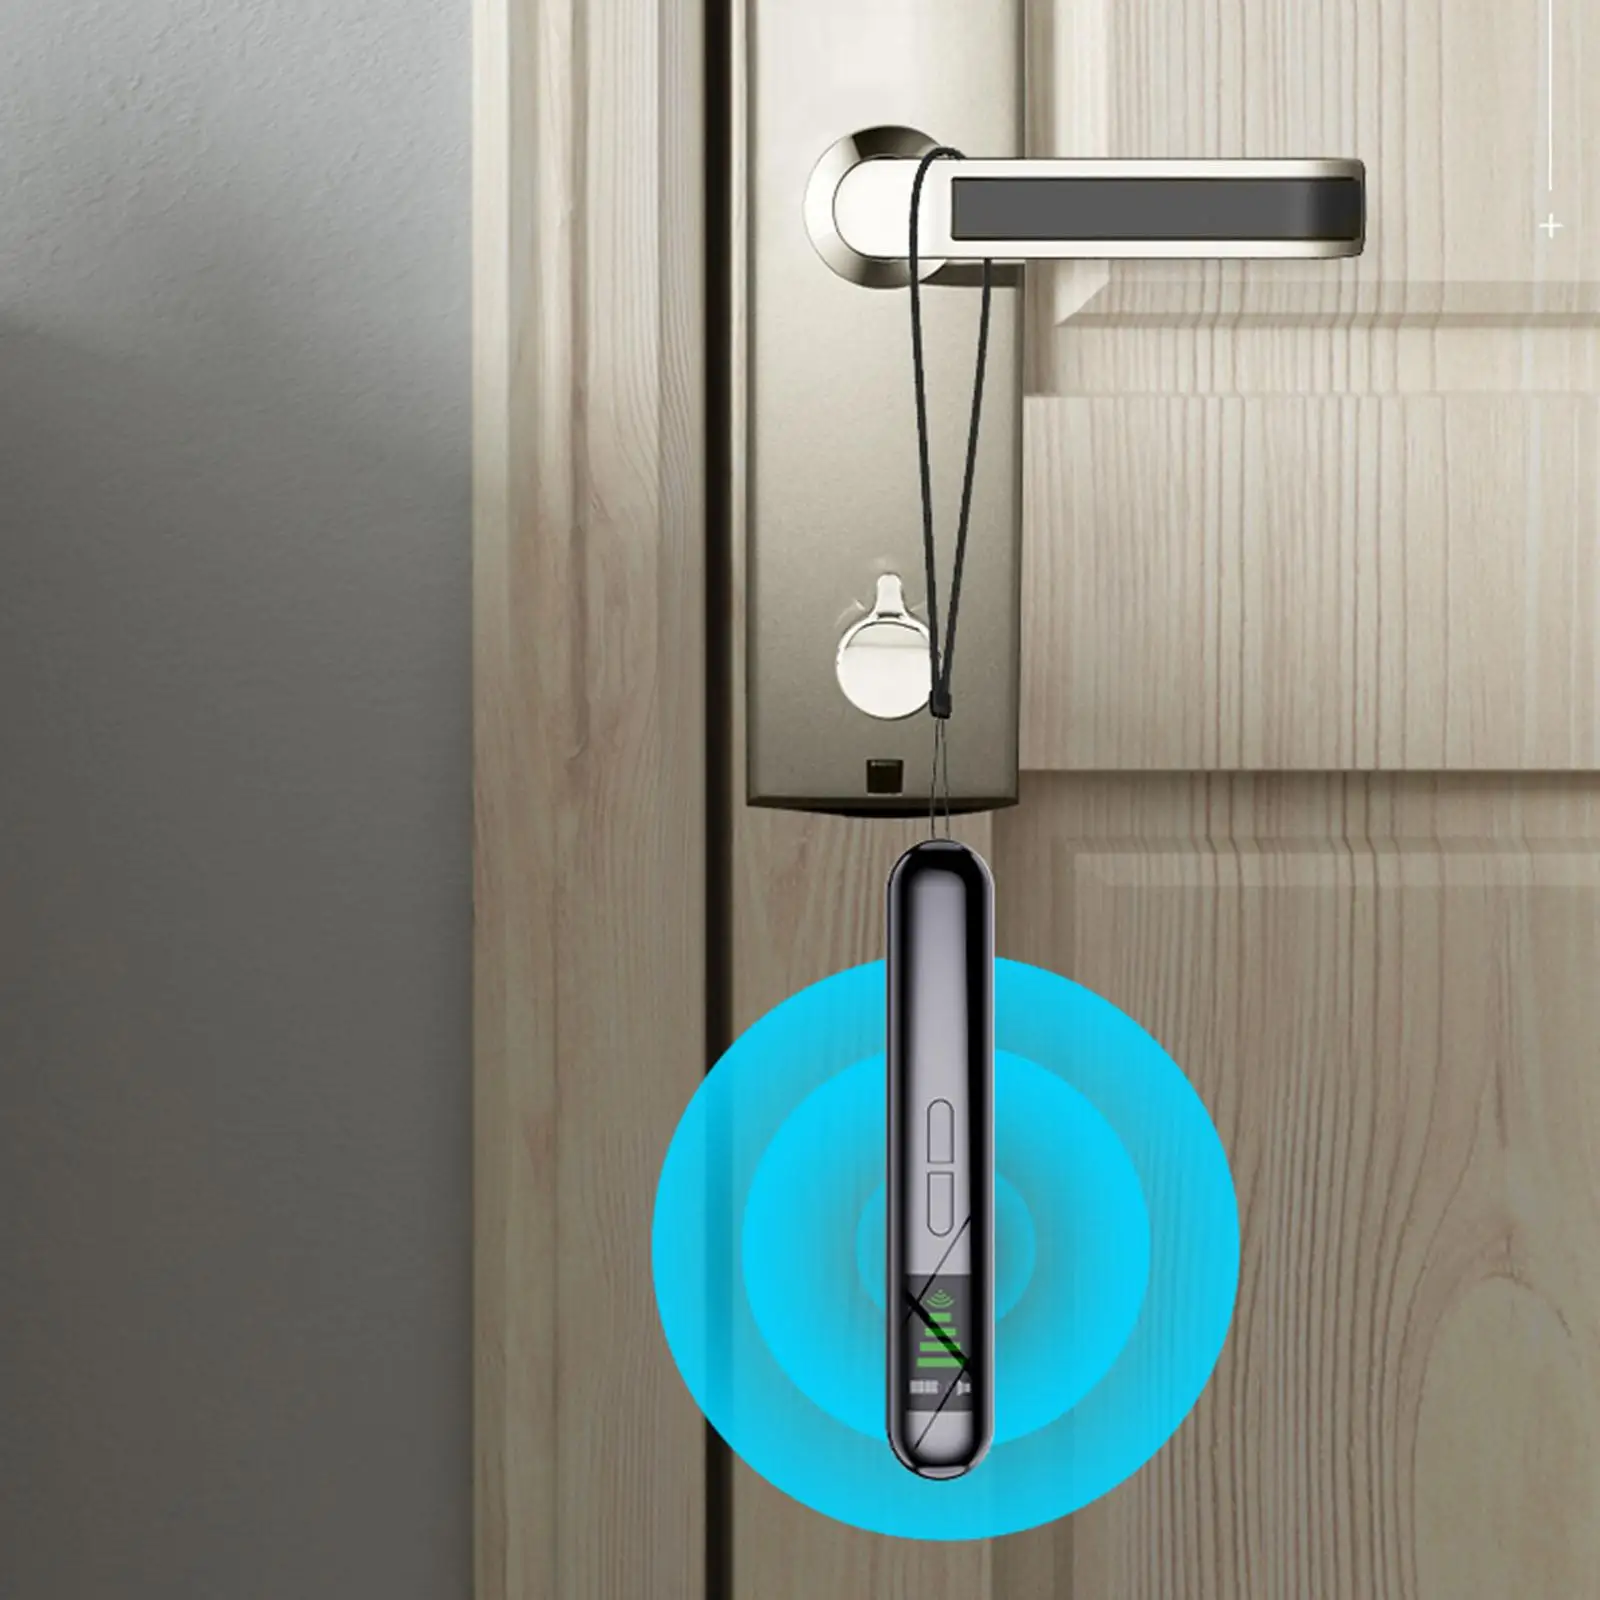 Portable Detector Wireless Anti Monitoring Protector Locator Blocker for Public Bathrooms Office Home